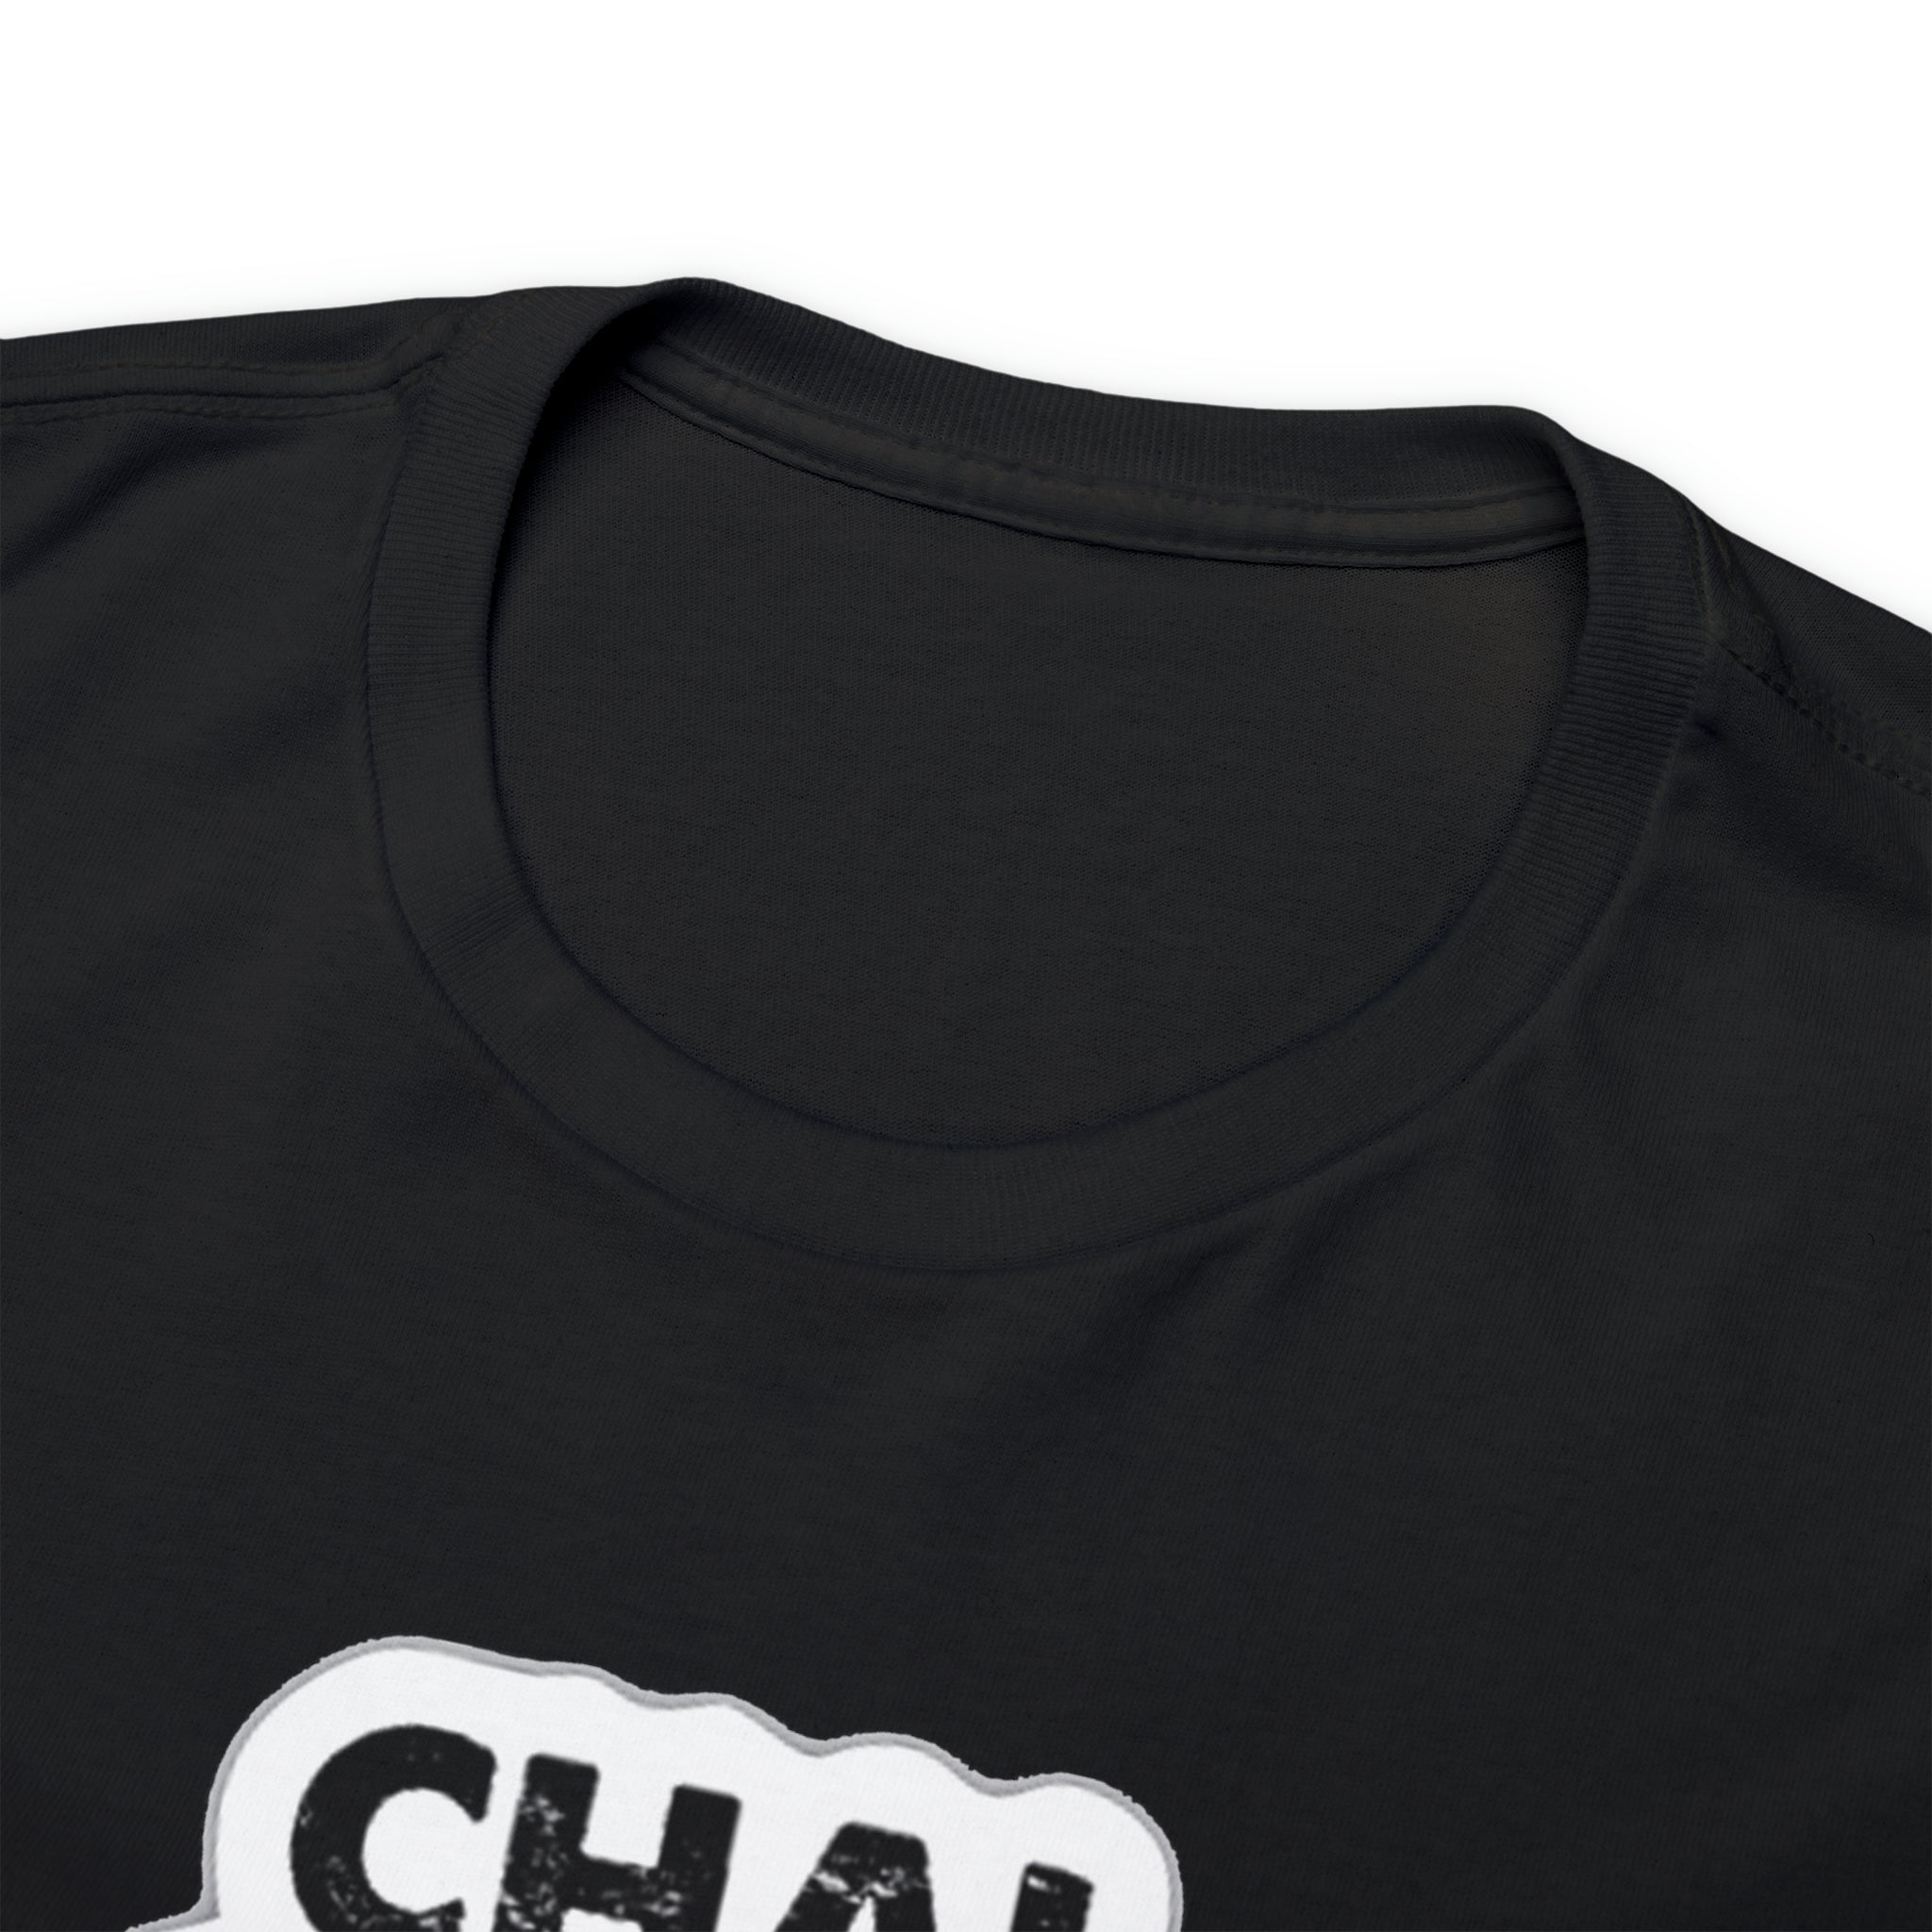 Chai Something New T-Shirt Design by C&C